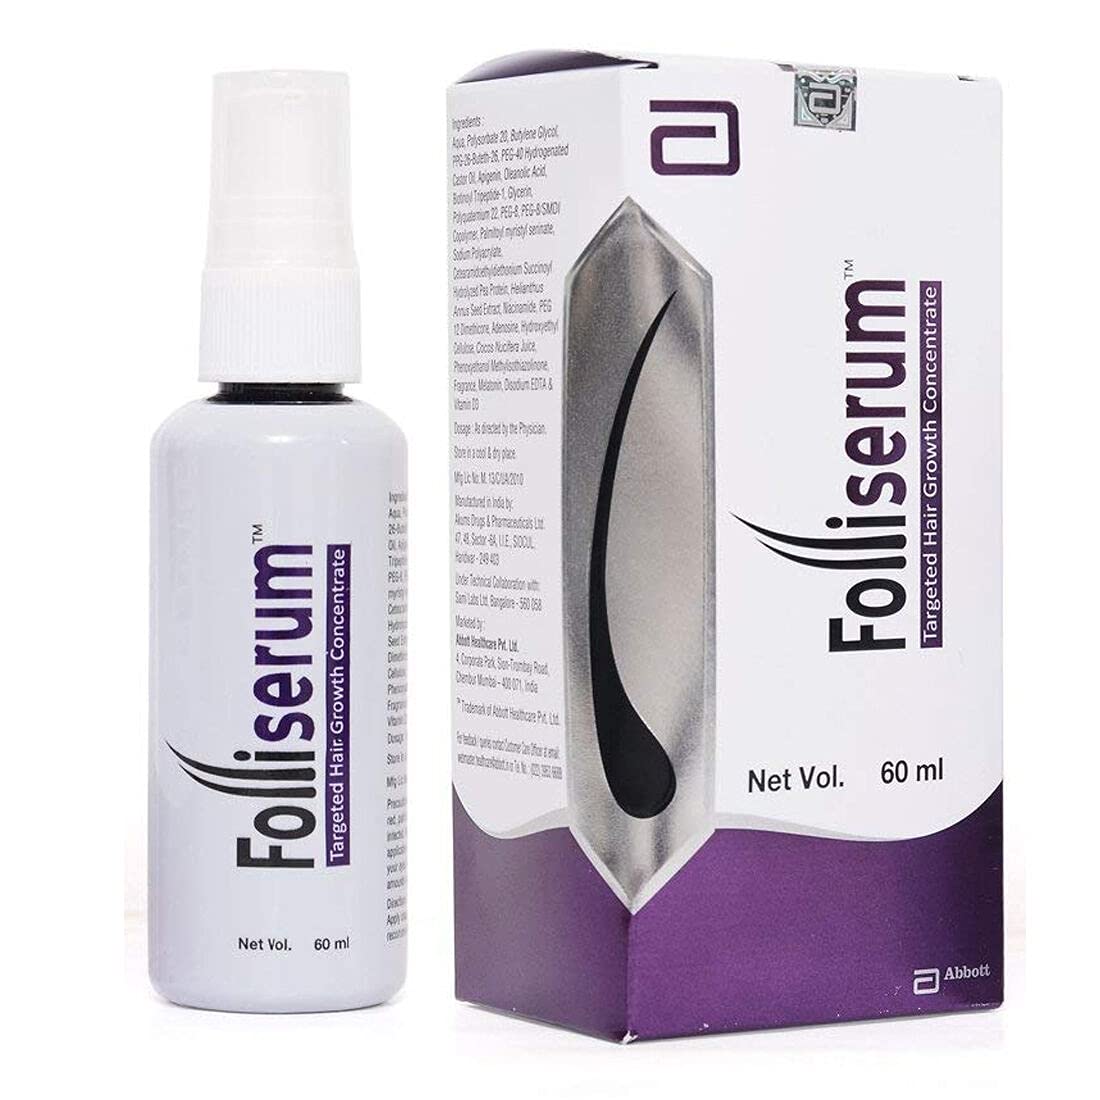 Folliserum Hair Growth Serum, 60 ml Price, Uses, Side Effects, Composition  - Apollo Pharmacy